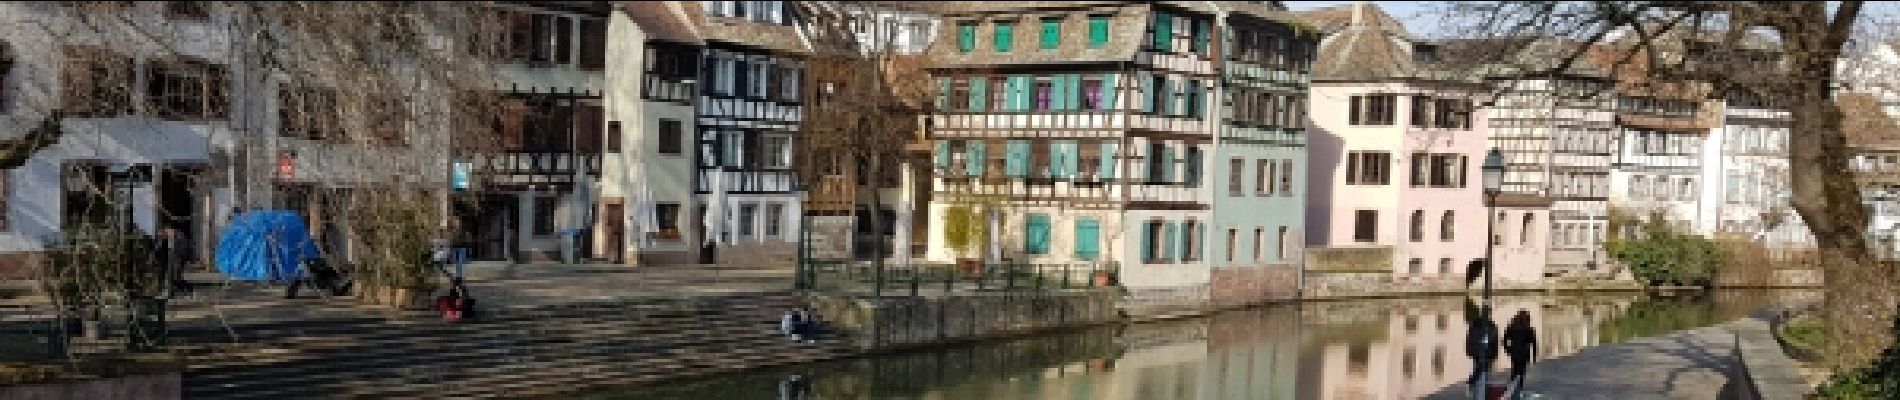 Point d'intérêt Strasbourg - Point 11 - Photo